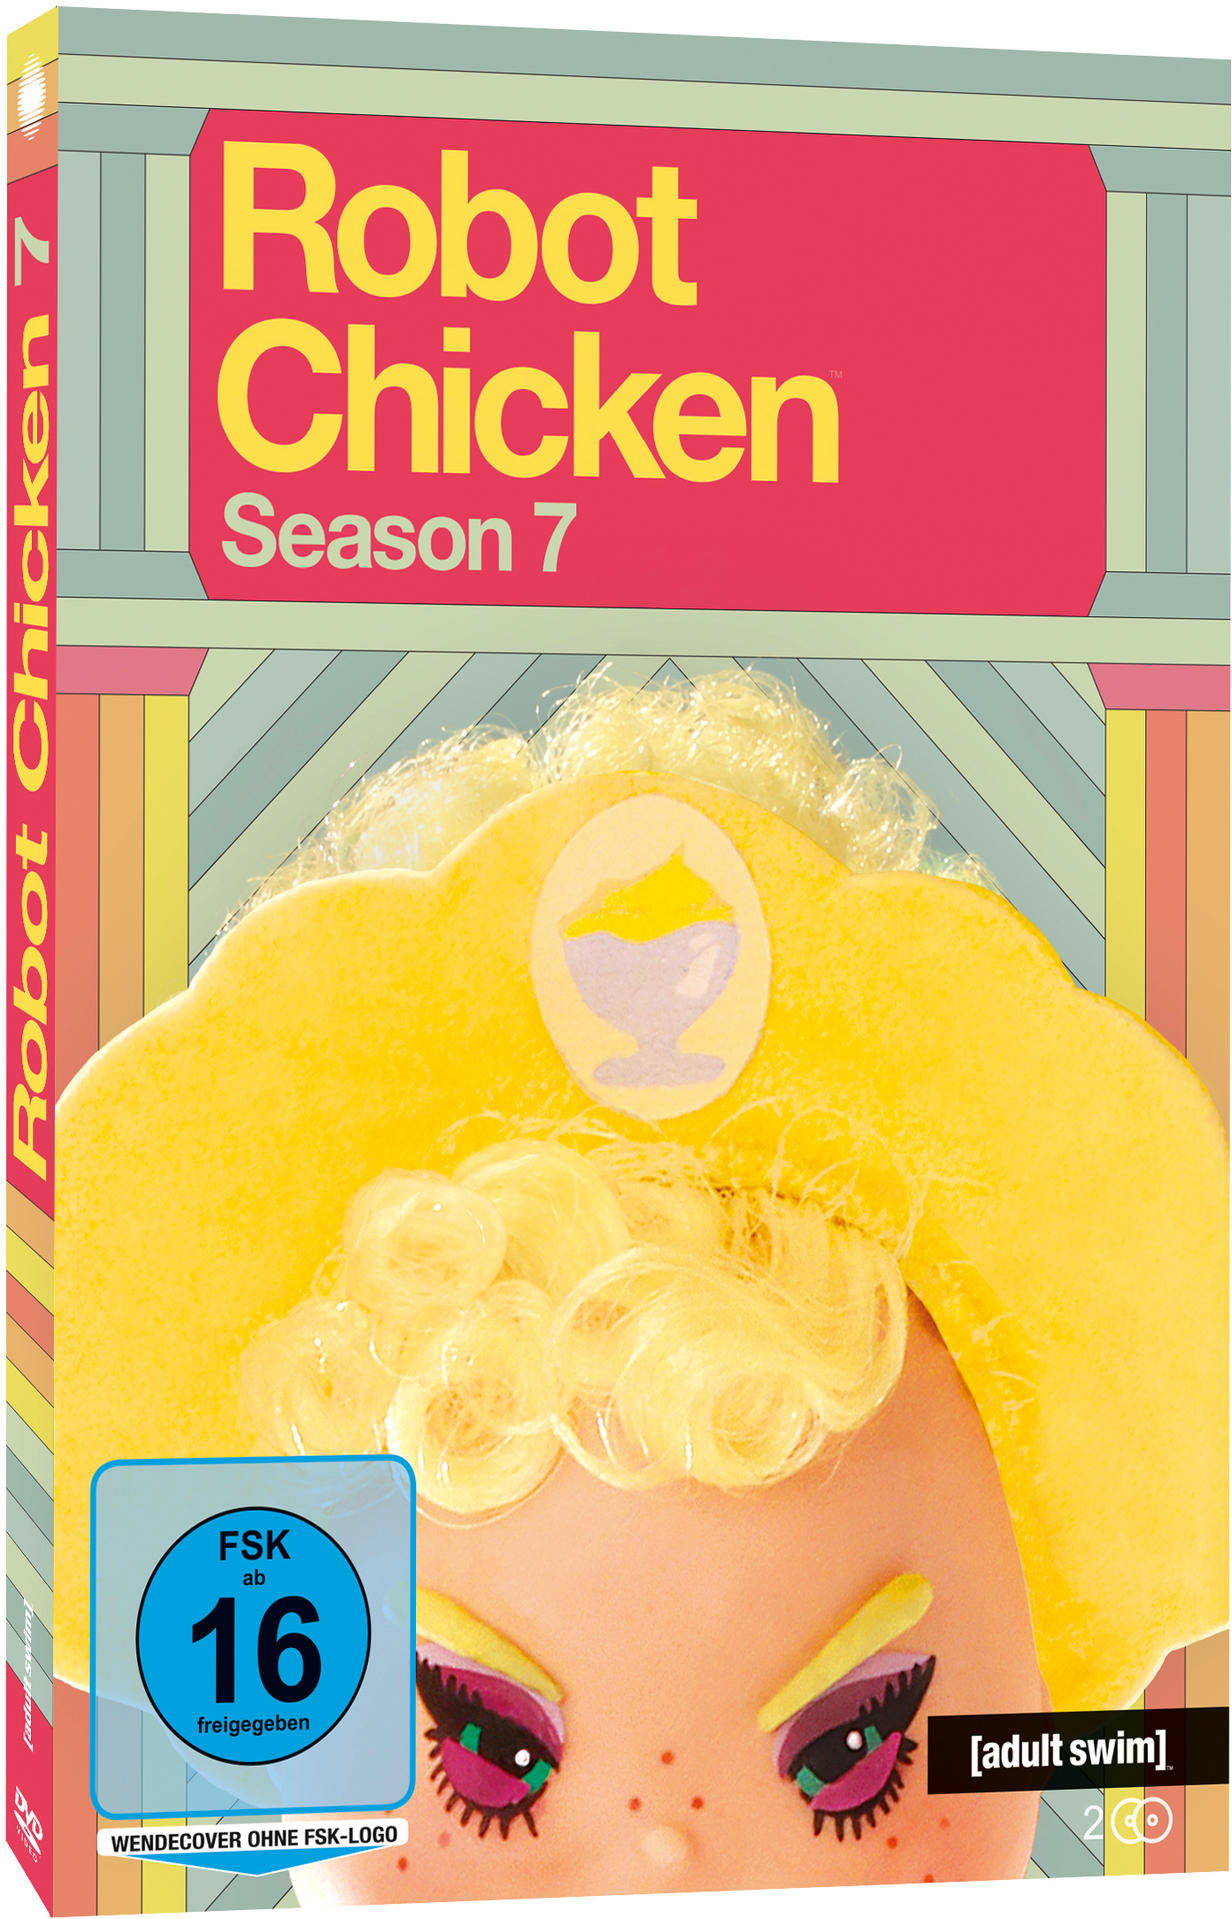 Season Chicken: DVD 7 Robot